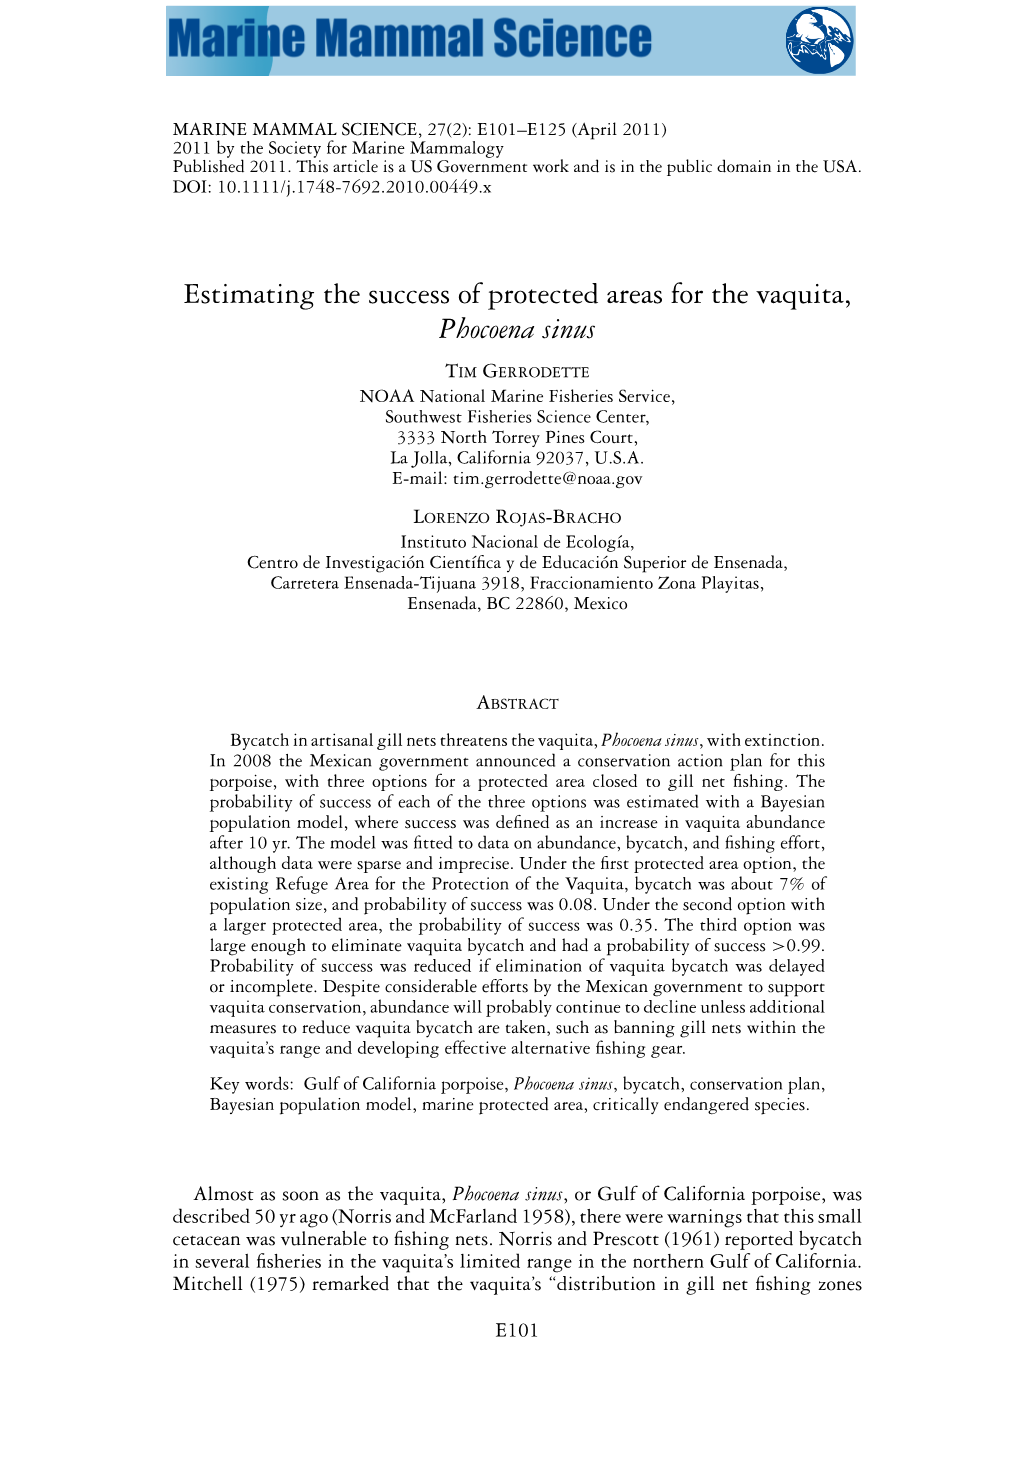 Estimating the Success of Protected Areas for the Vaquita, Phocoena Sinus